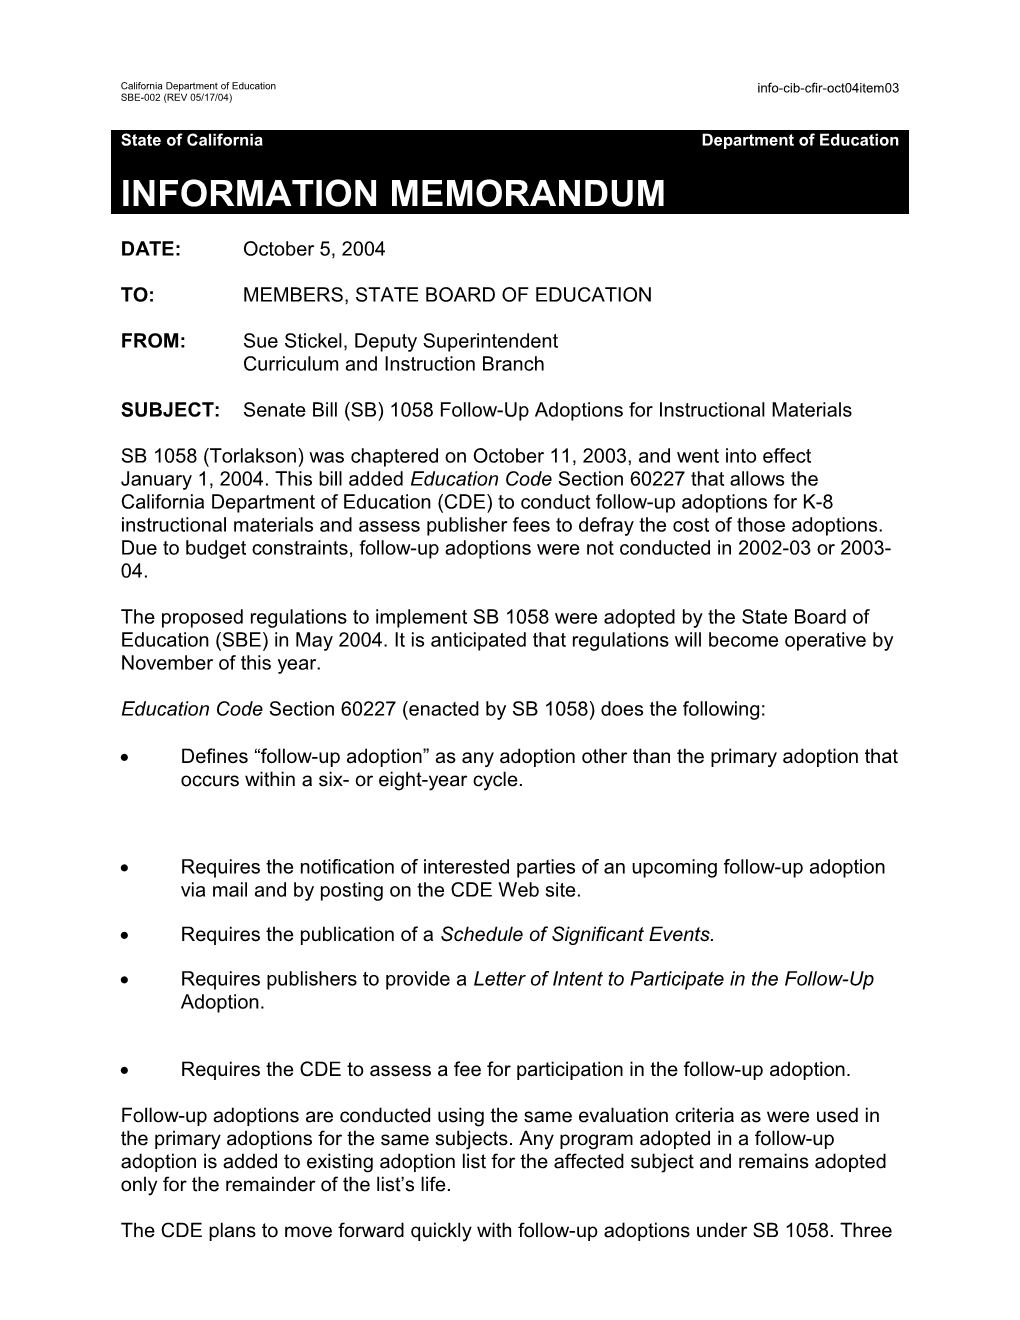 October 2004 CFIR Agenda Item 3 - Information Memorandum (CA State Board of Education)